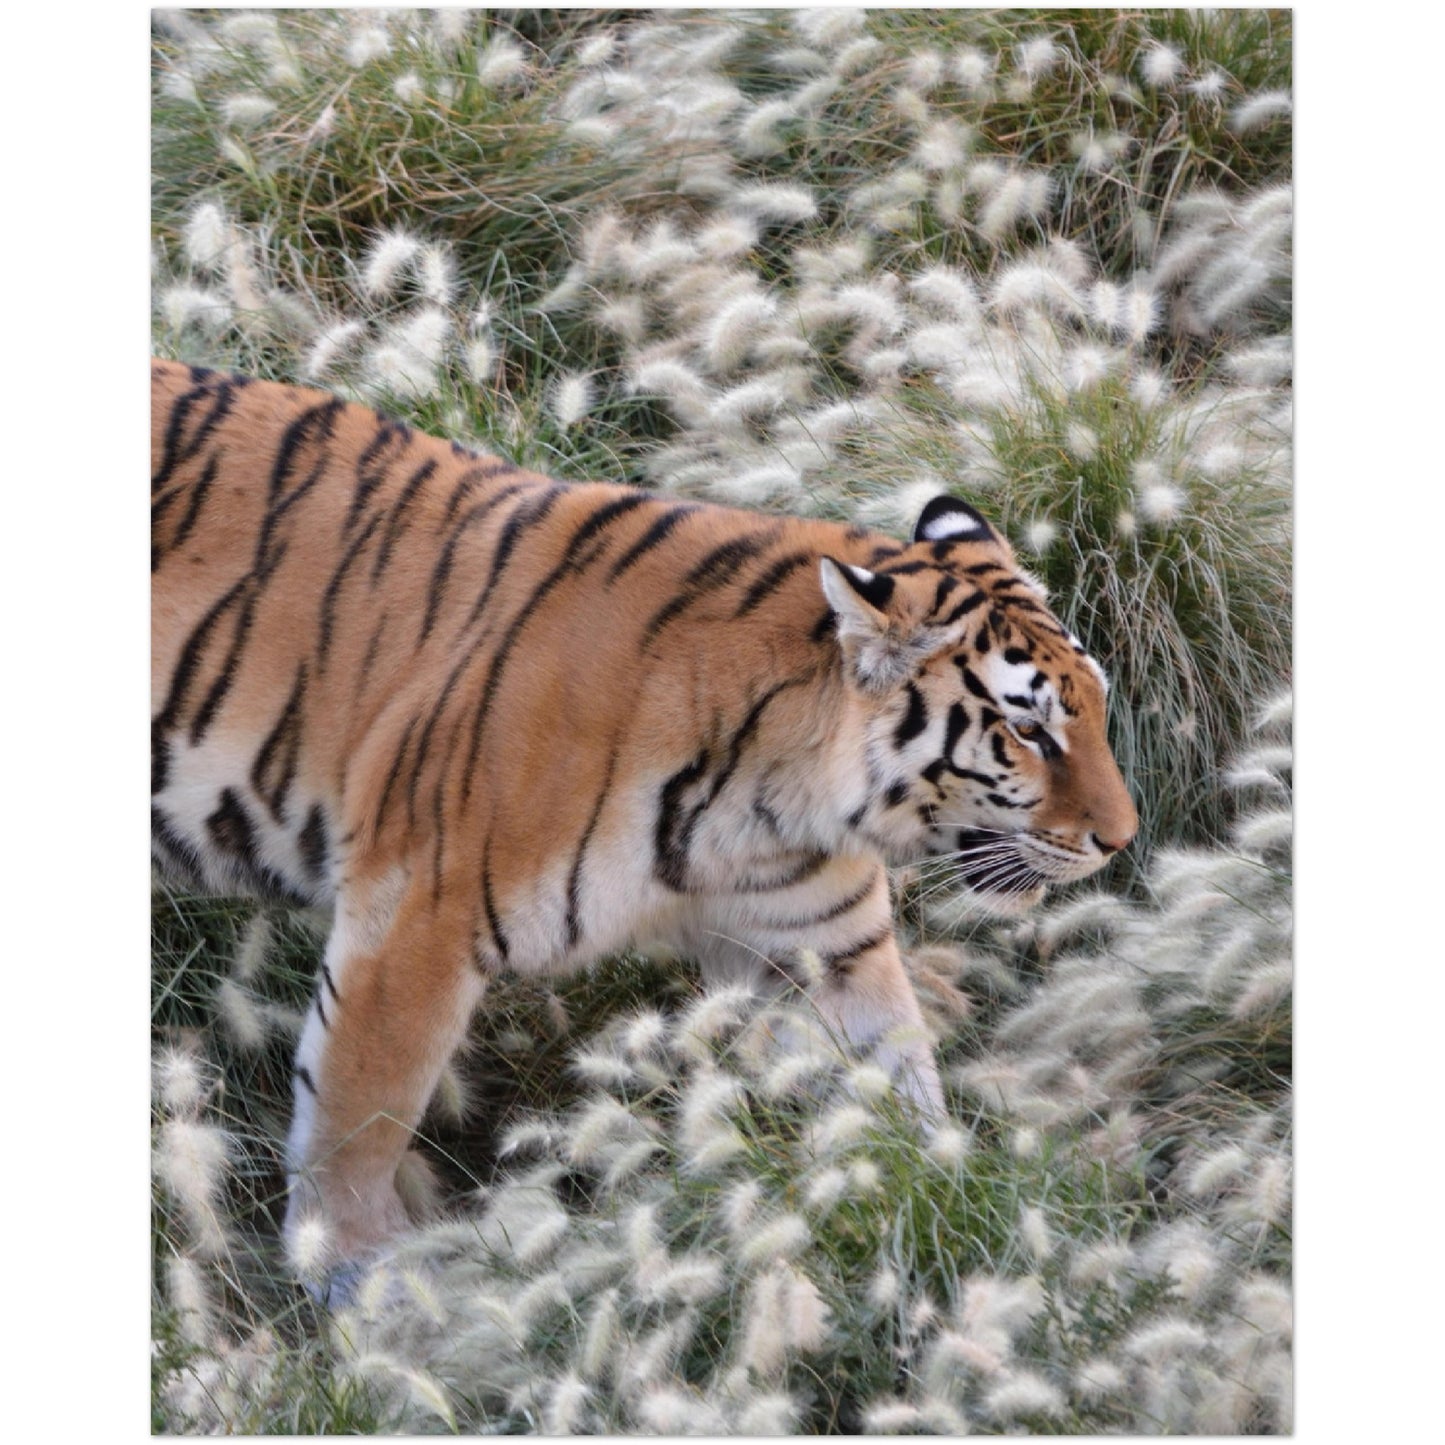 Grass Tiger Print